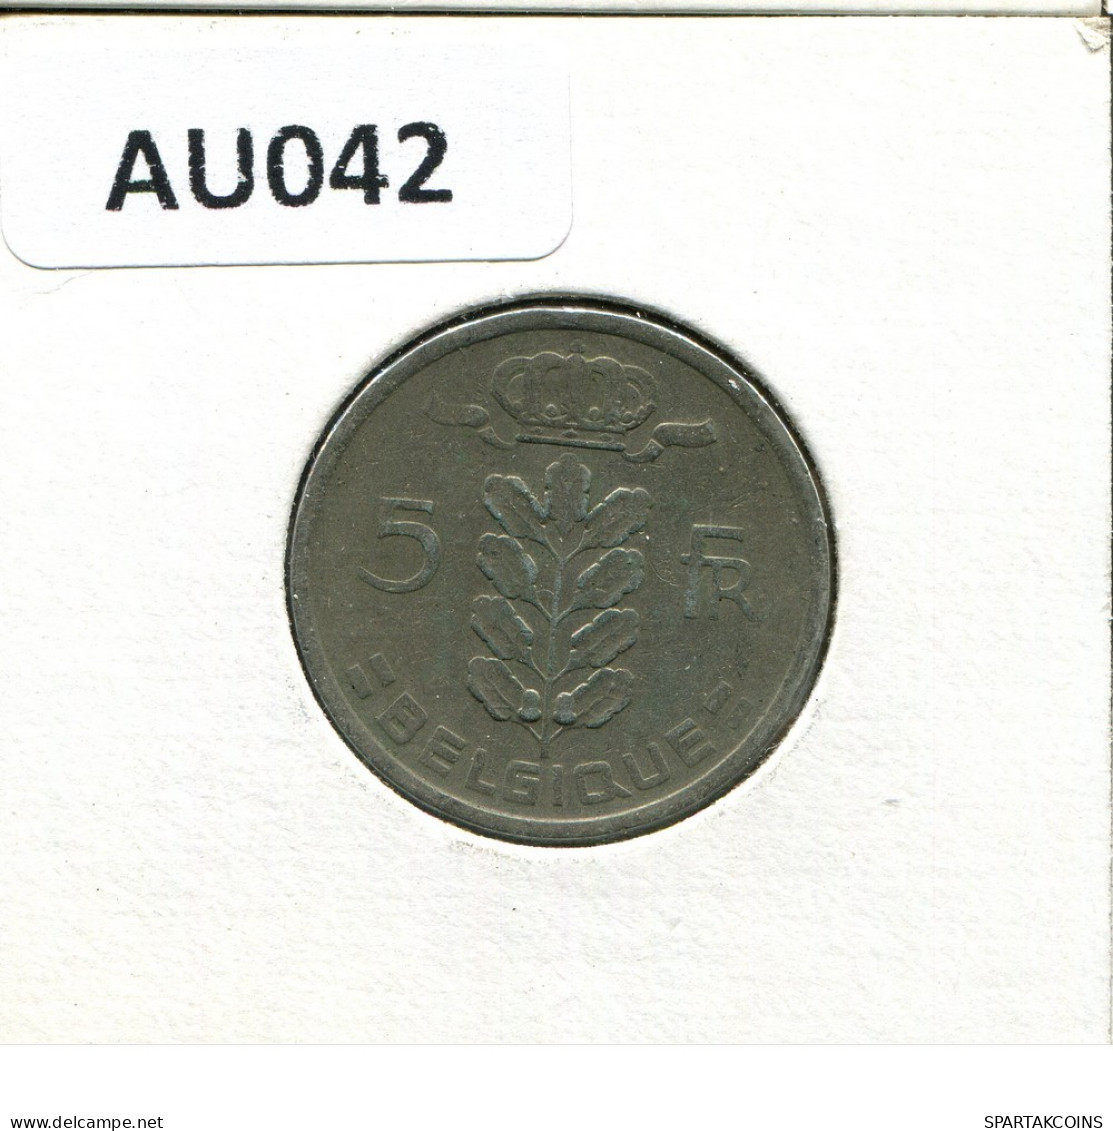 5 FRANCS 1949 FRENCH Text BELGIUM Coin #AU042.U.A - 5 Franc